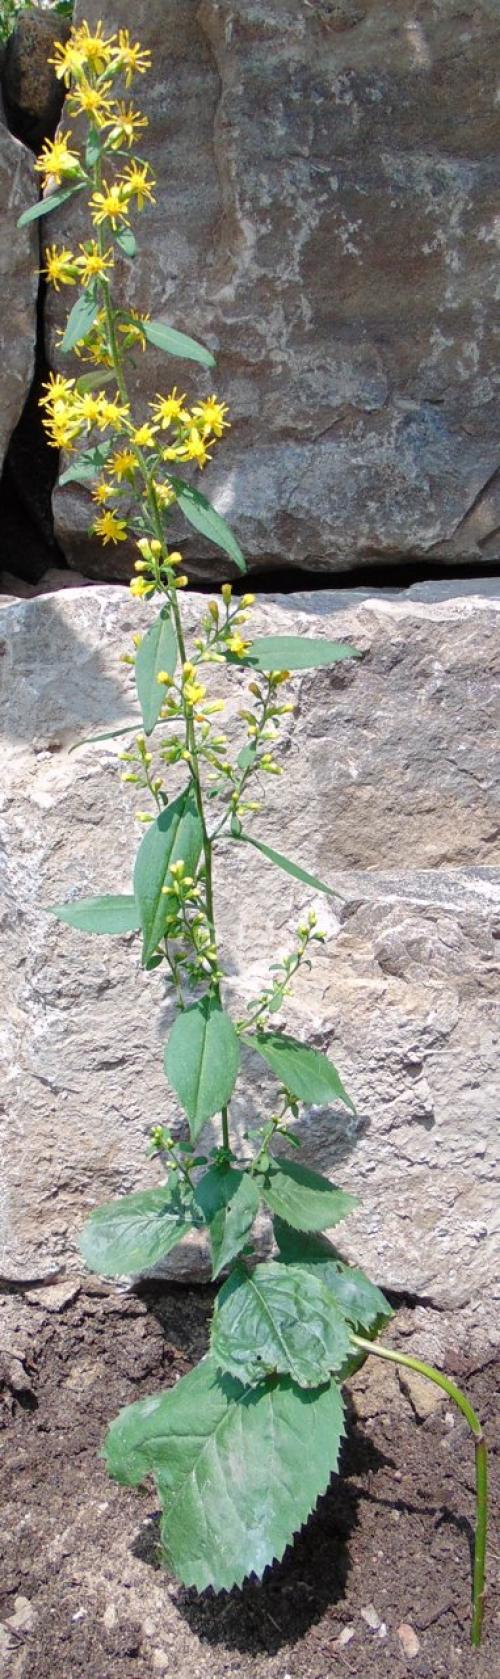 Solidago macrophylla, Large-leaved Goldenrod